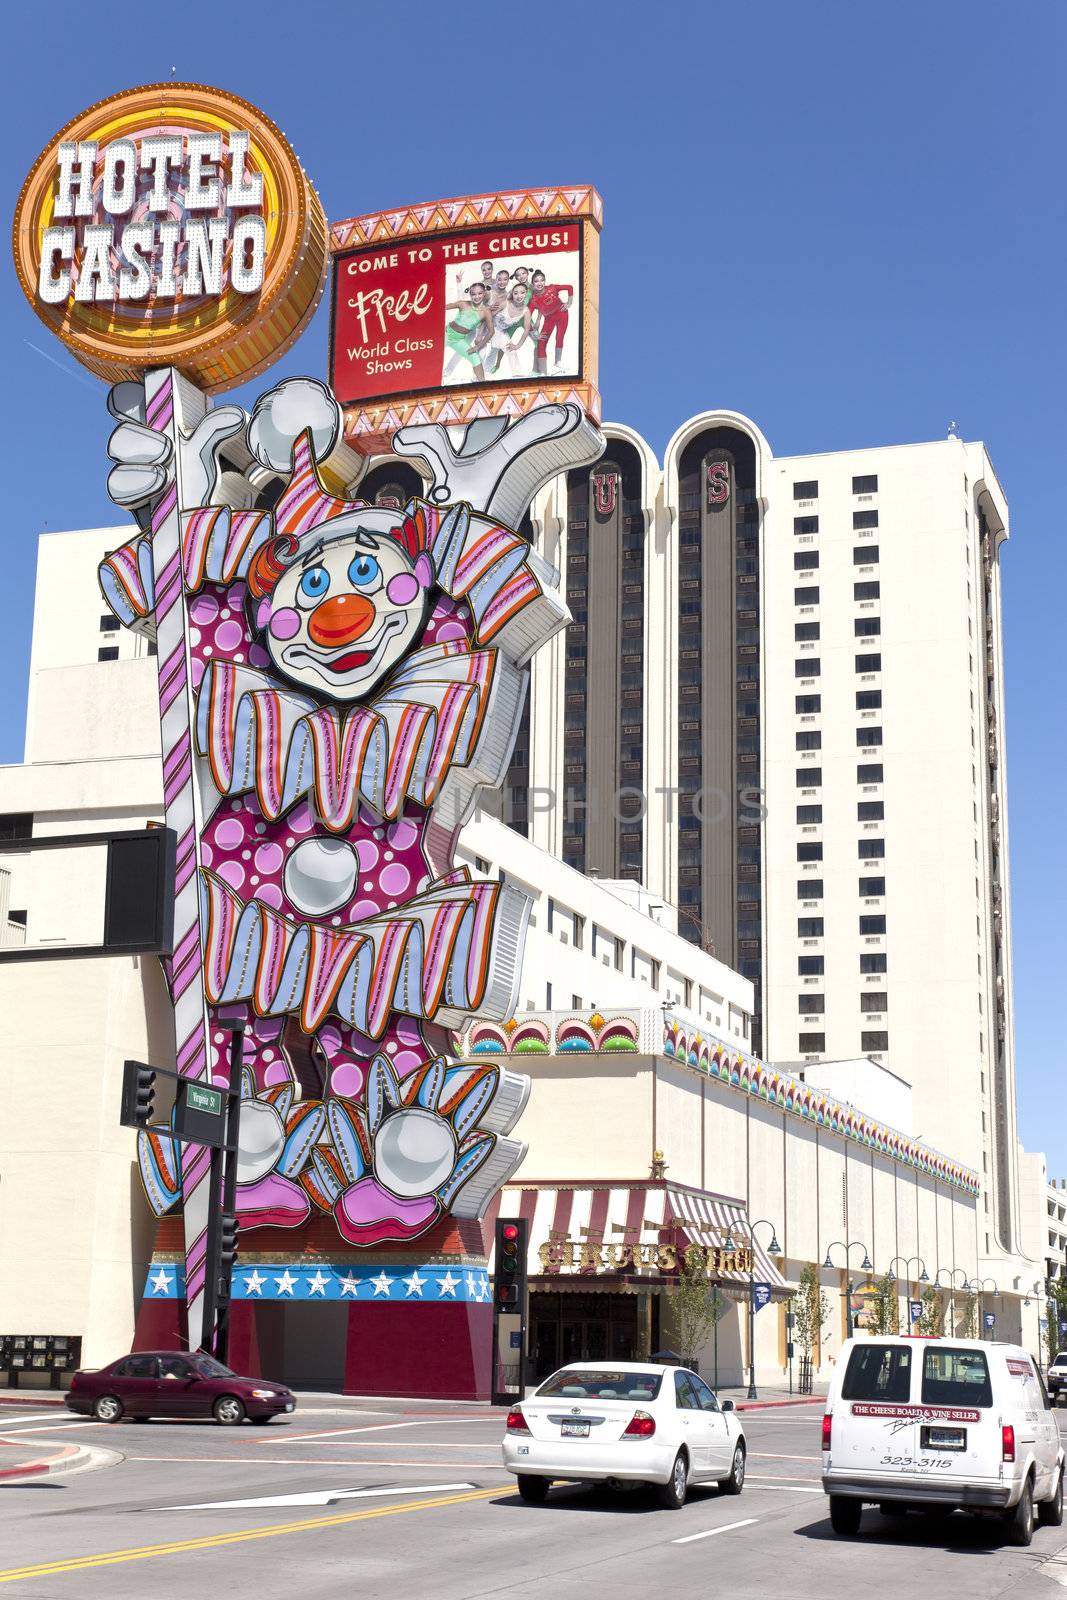 Circus Circus casino hotel, Reno NV. by Rigucci